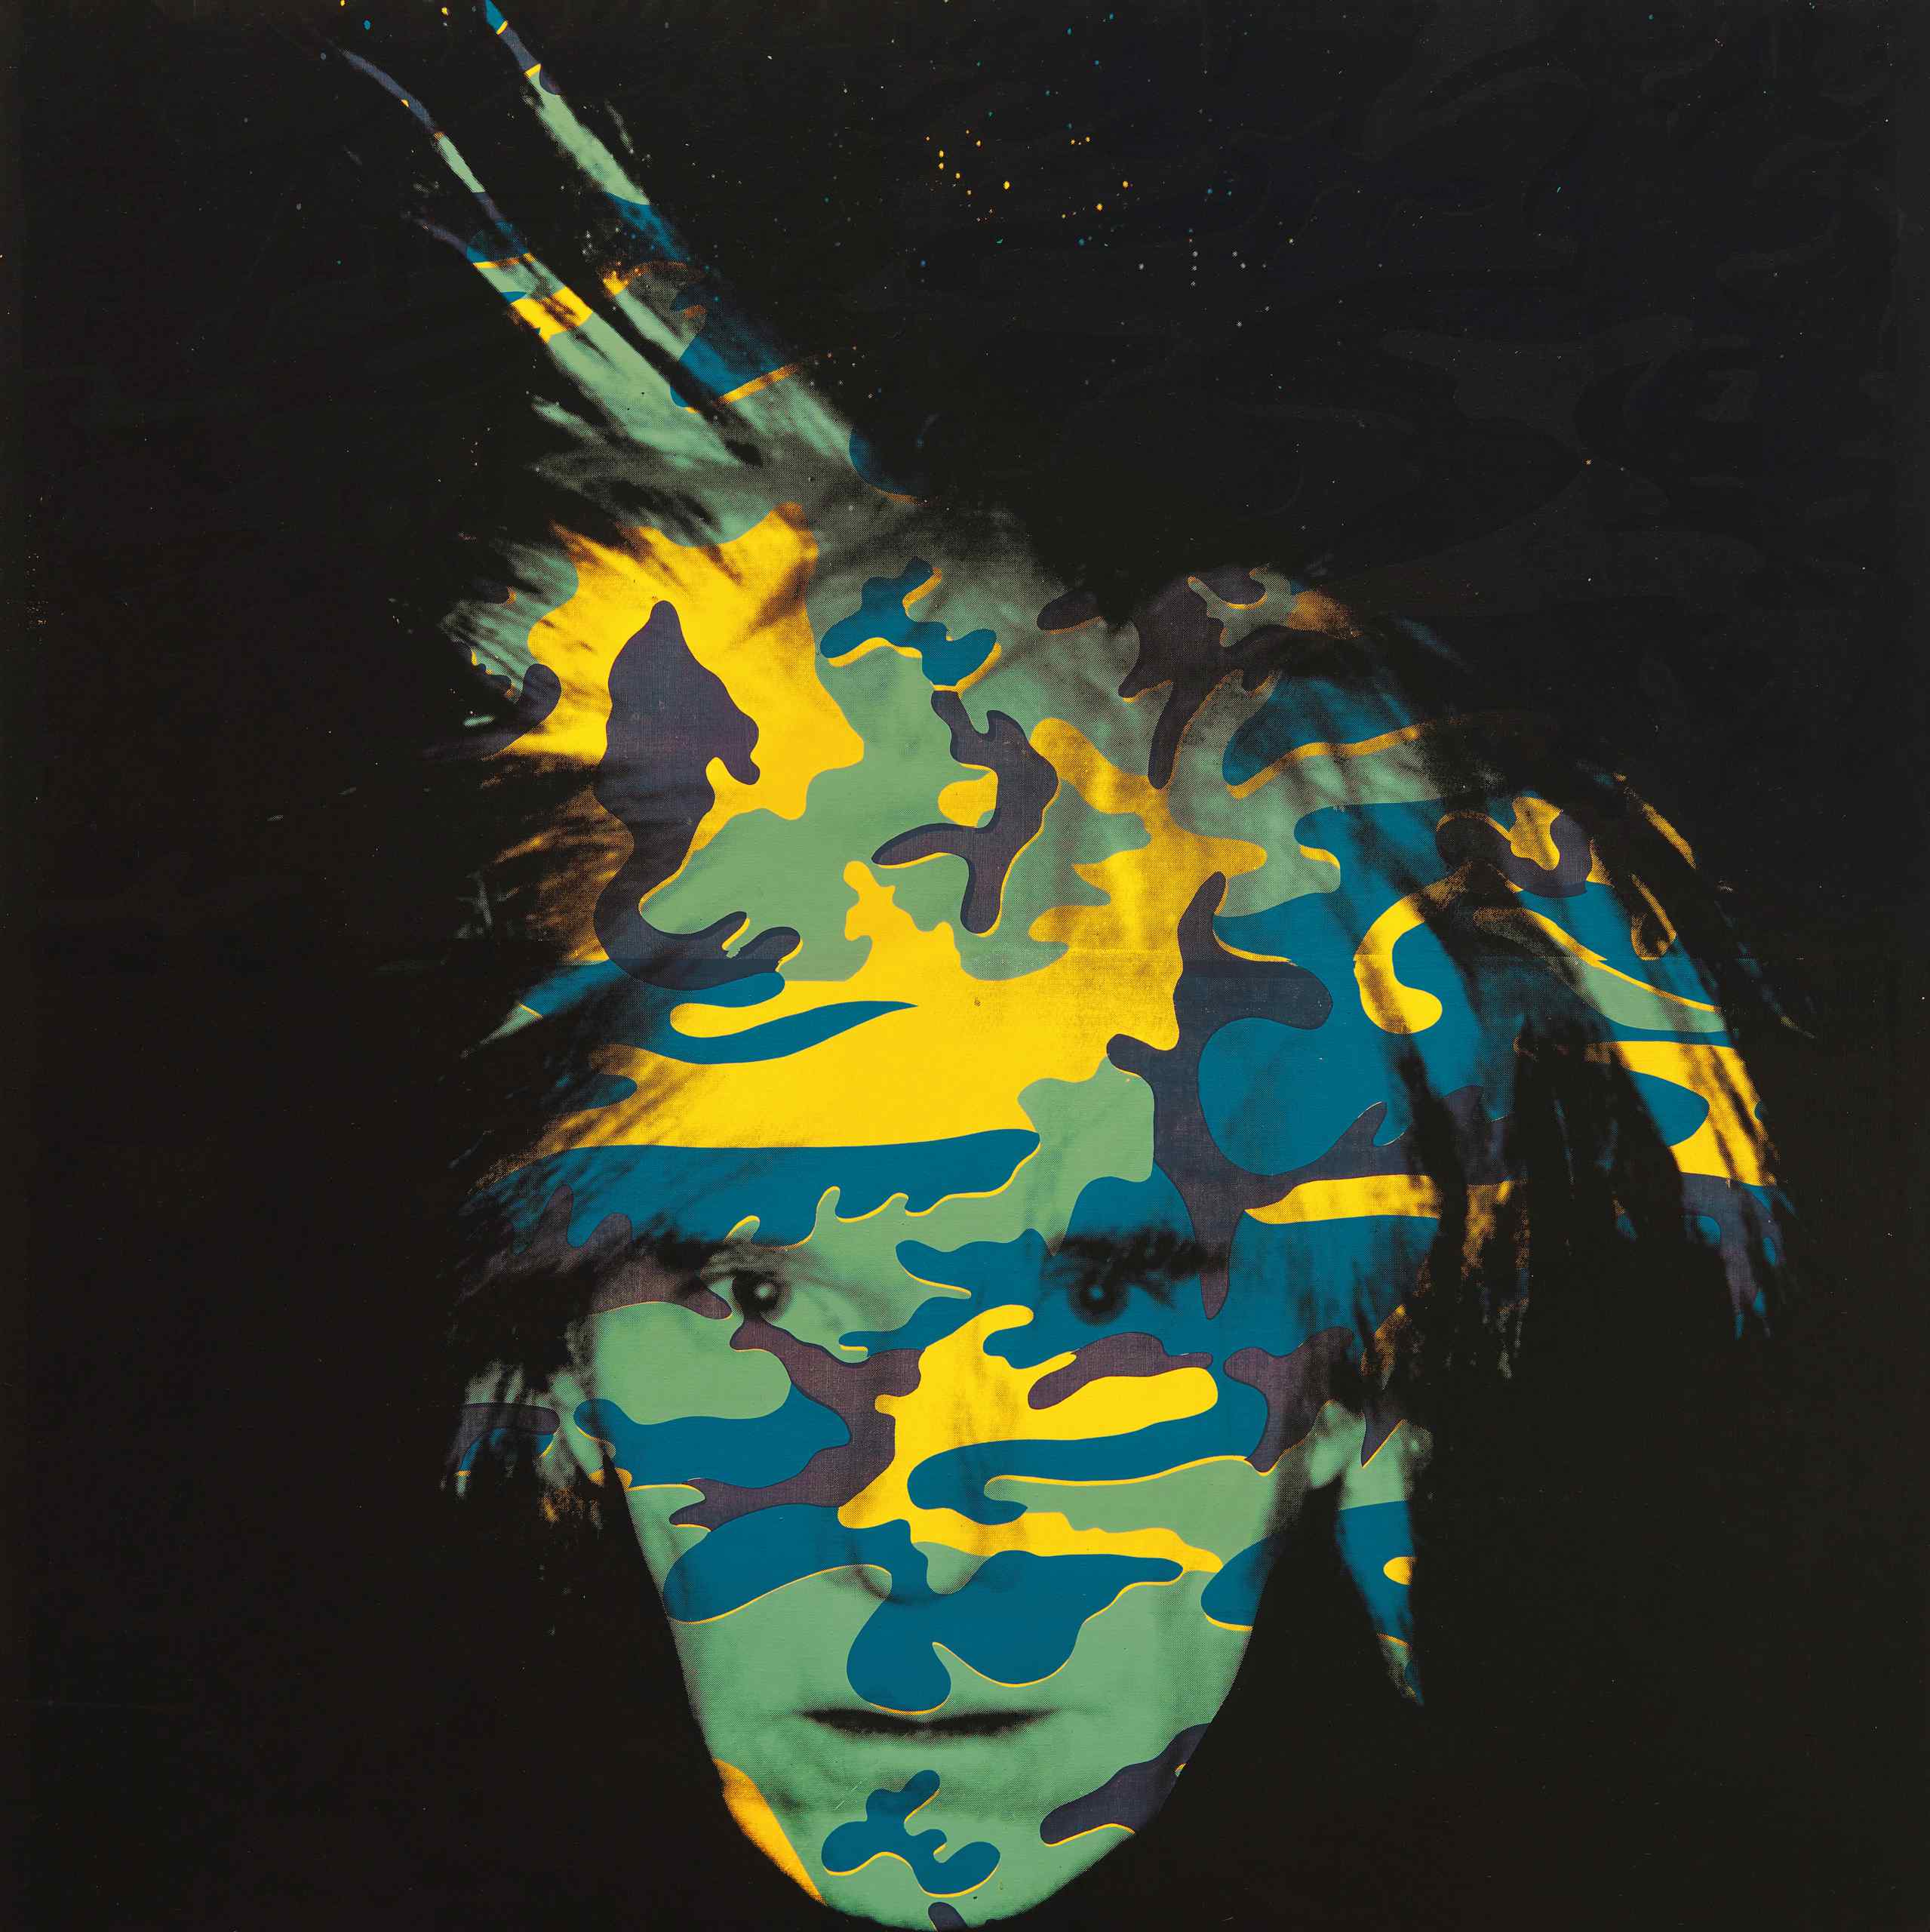 Andy Warhol, Self-Portrait, 1986